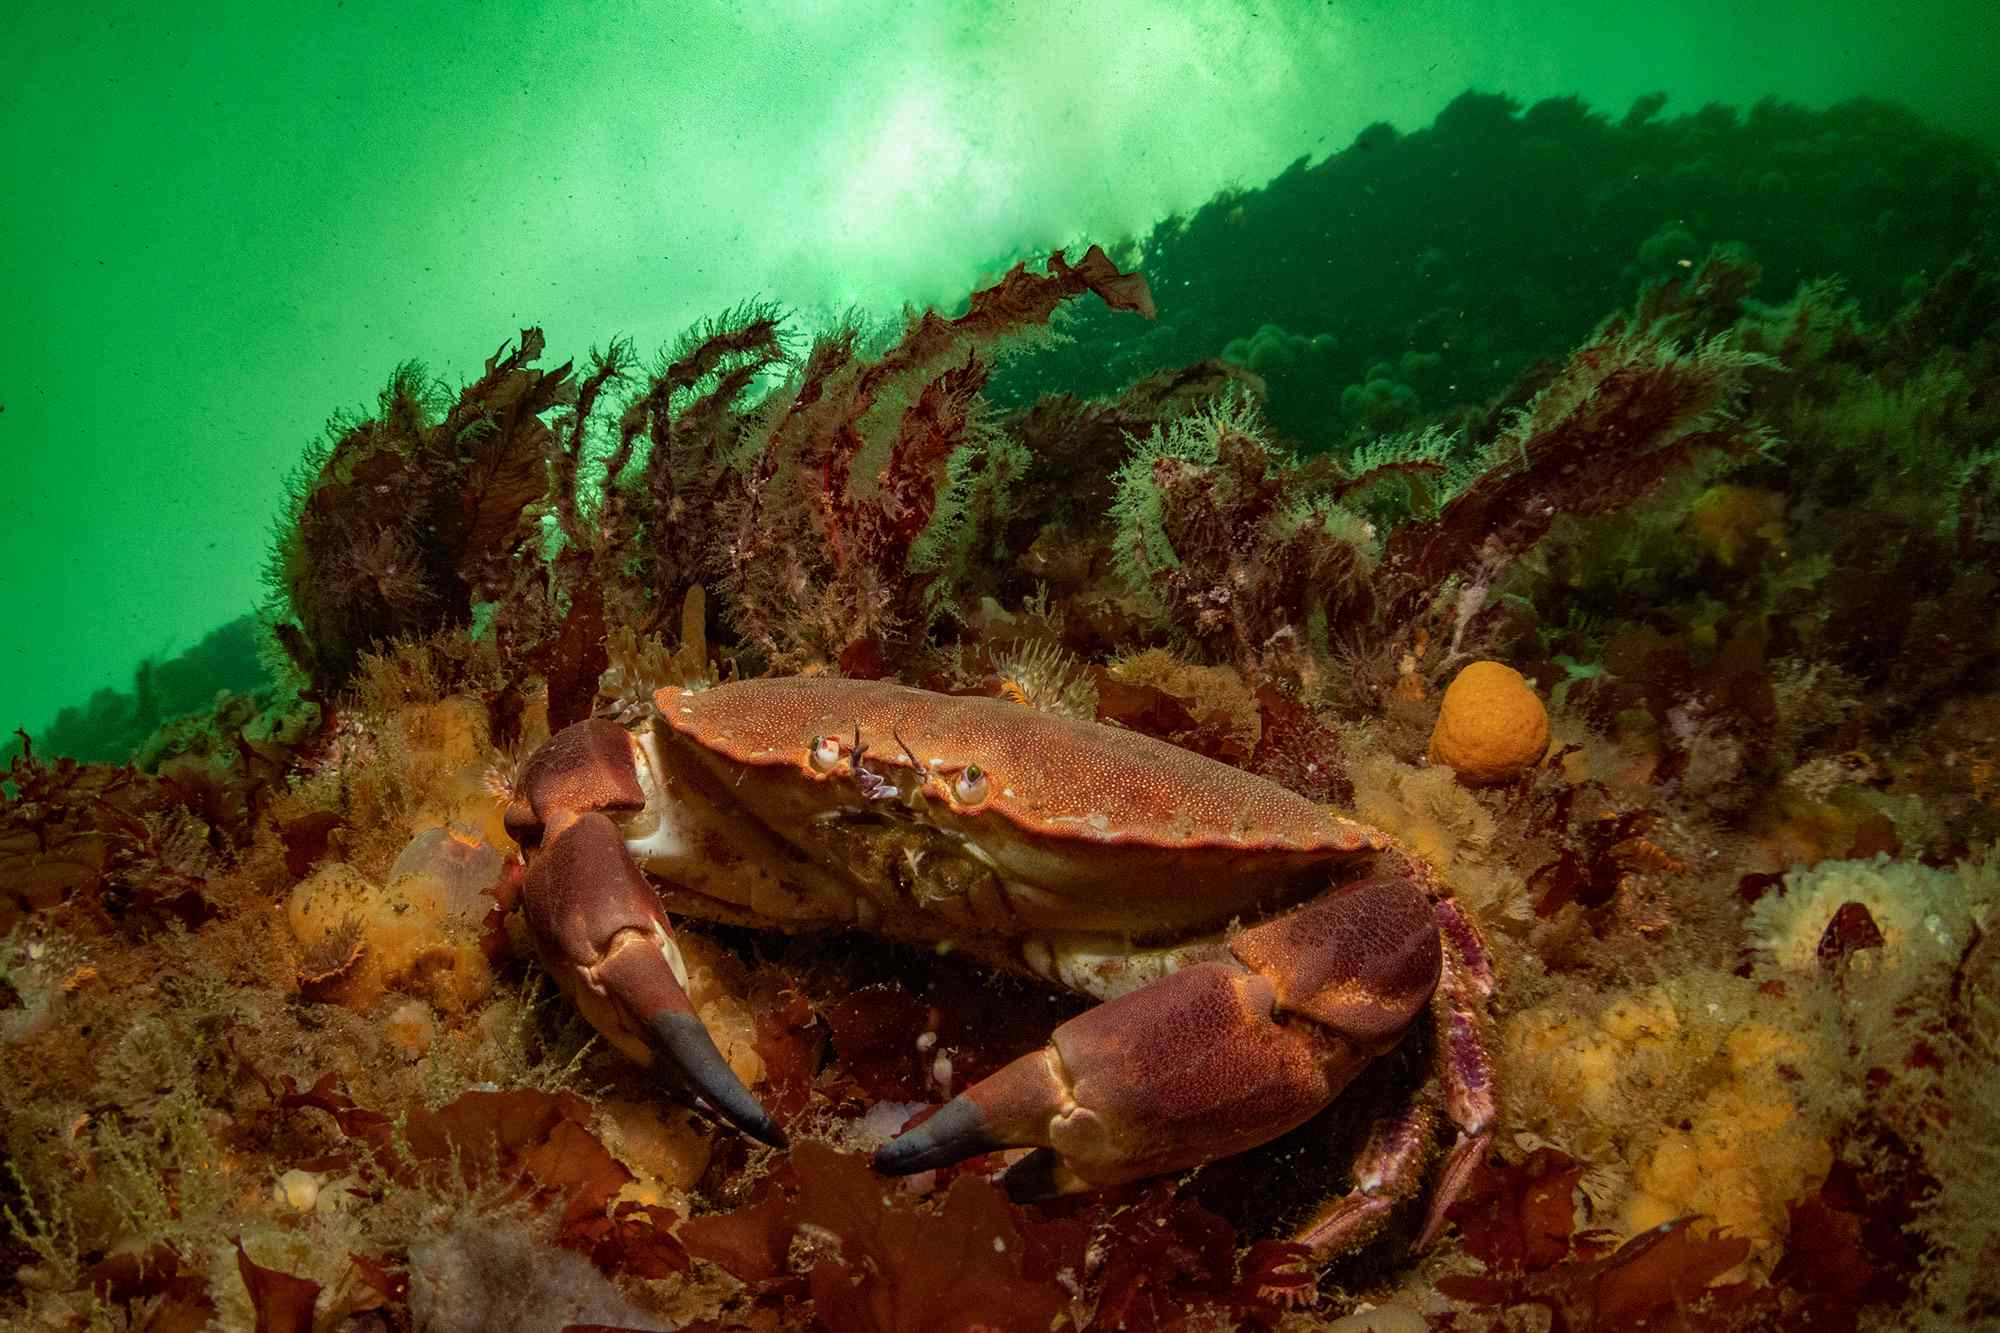 Edible crab, St Abbs, Berwickshire marine reserve by Georgie Bull